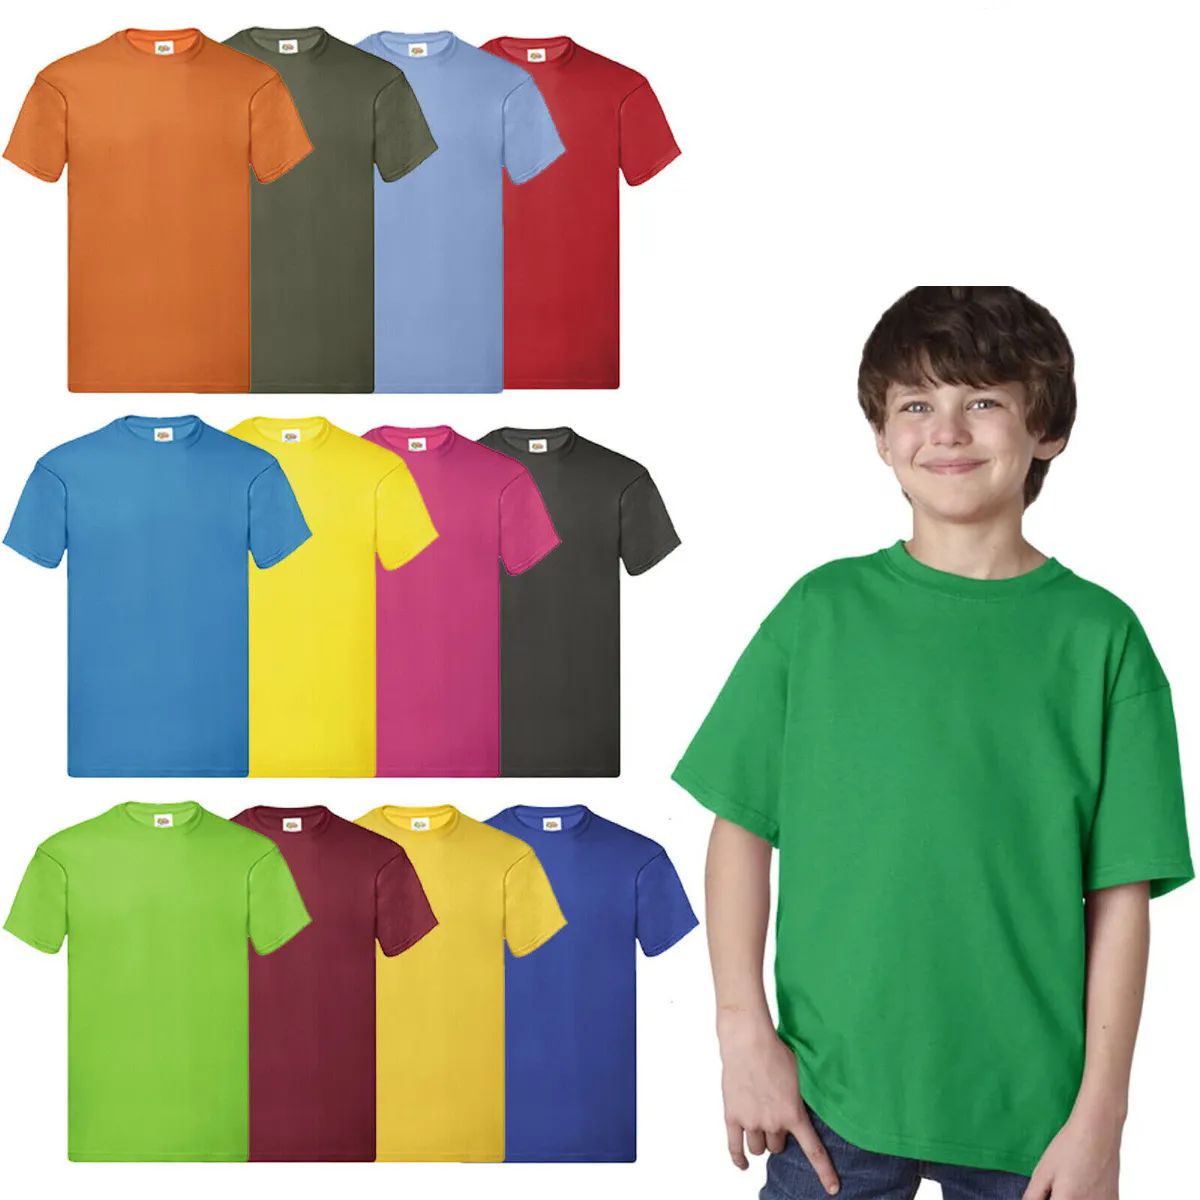 432 Wholesale Billion Hats Kids Youth Cotton Assorted Colors T Shirts Size M